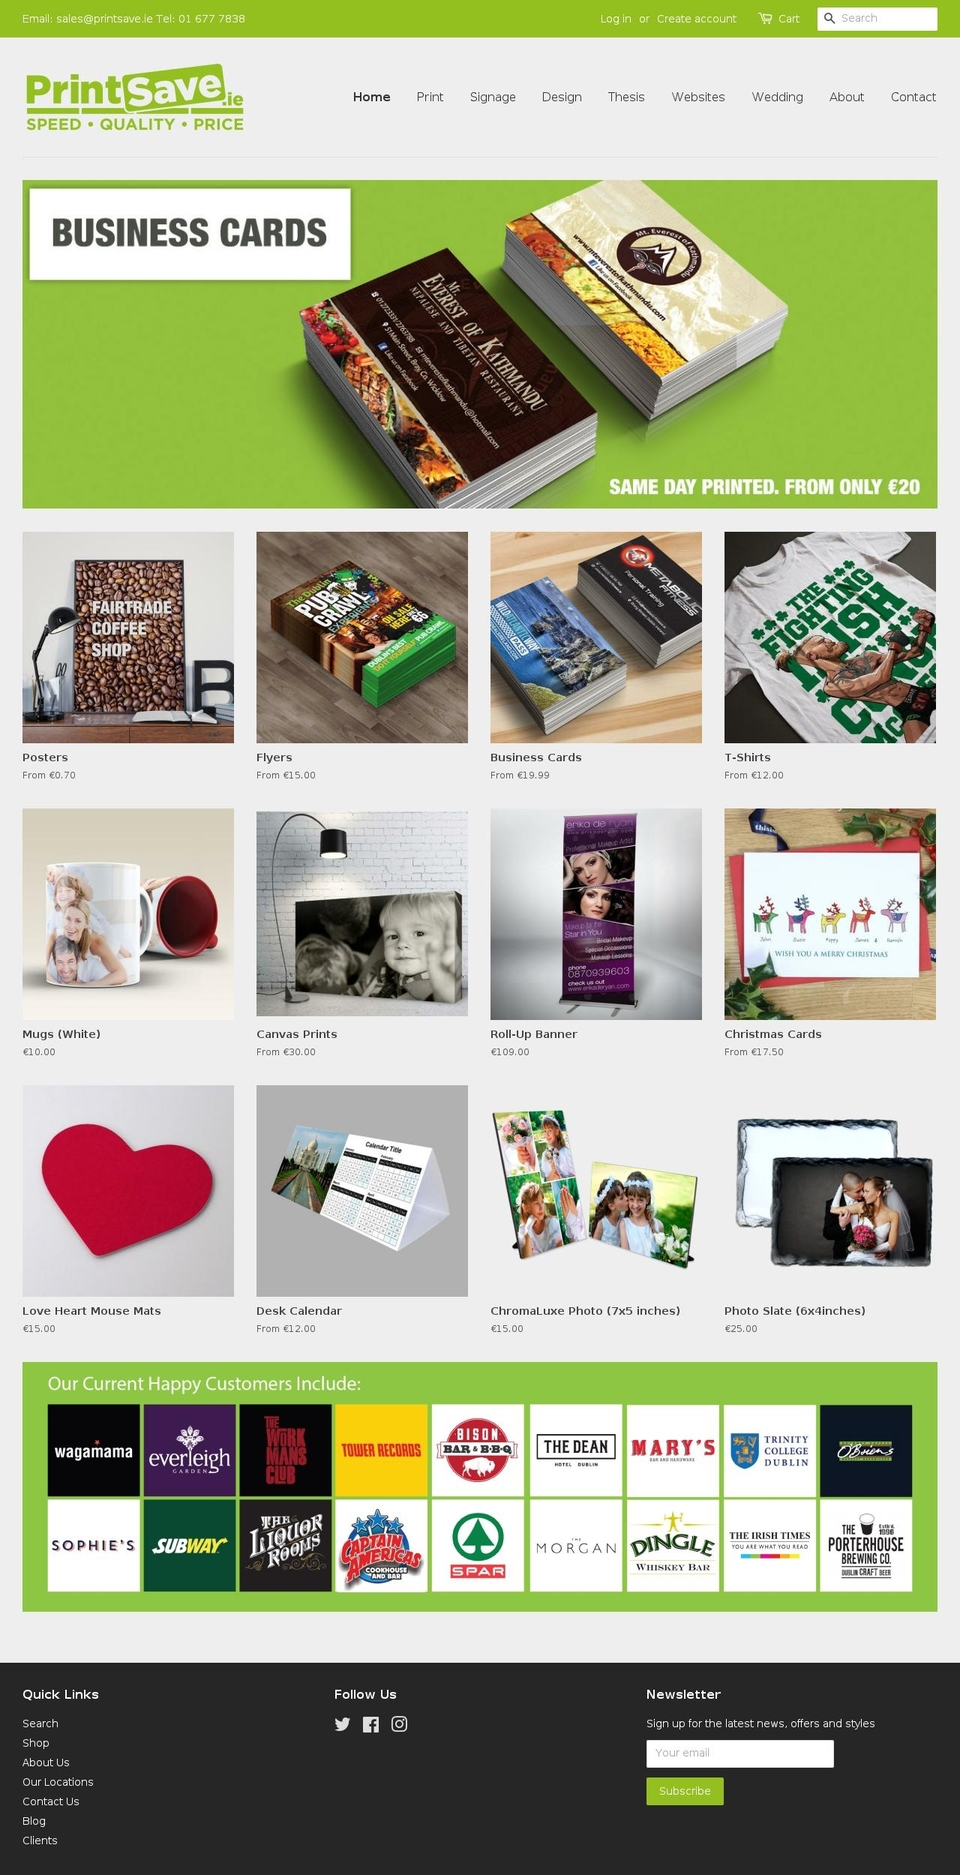 printsave.ie shopify website screenshot